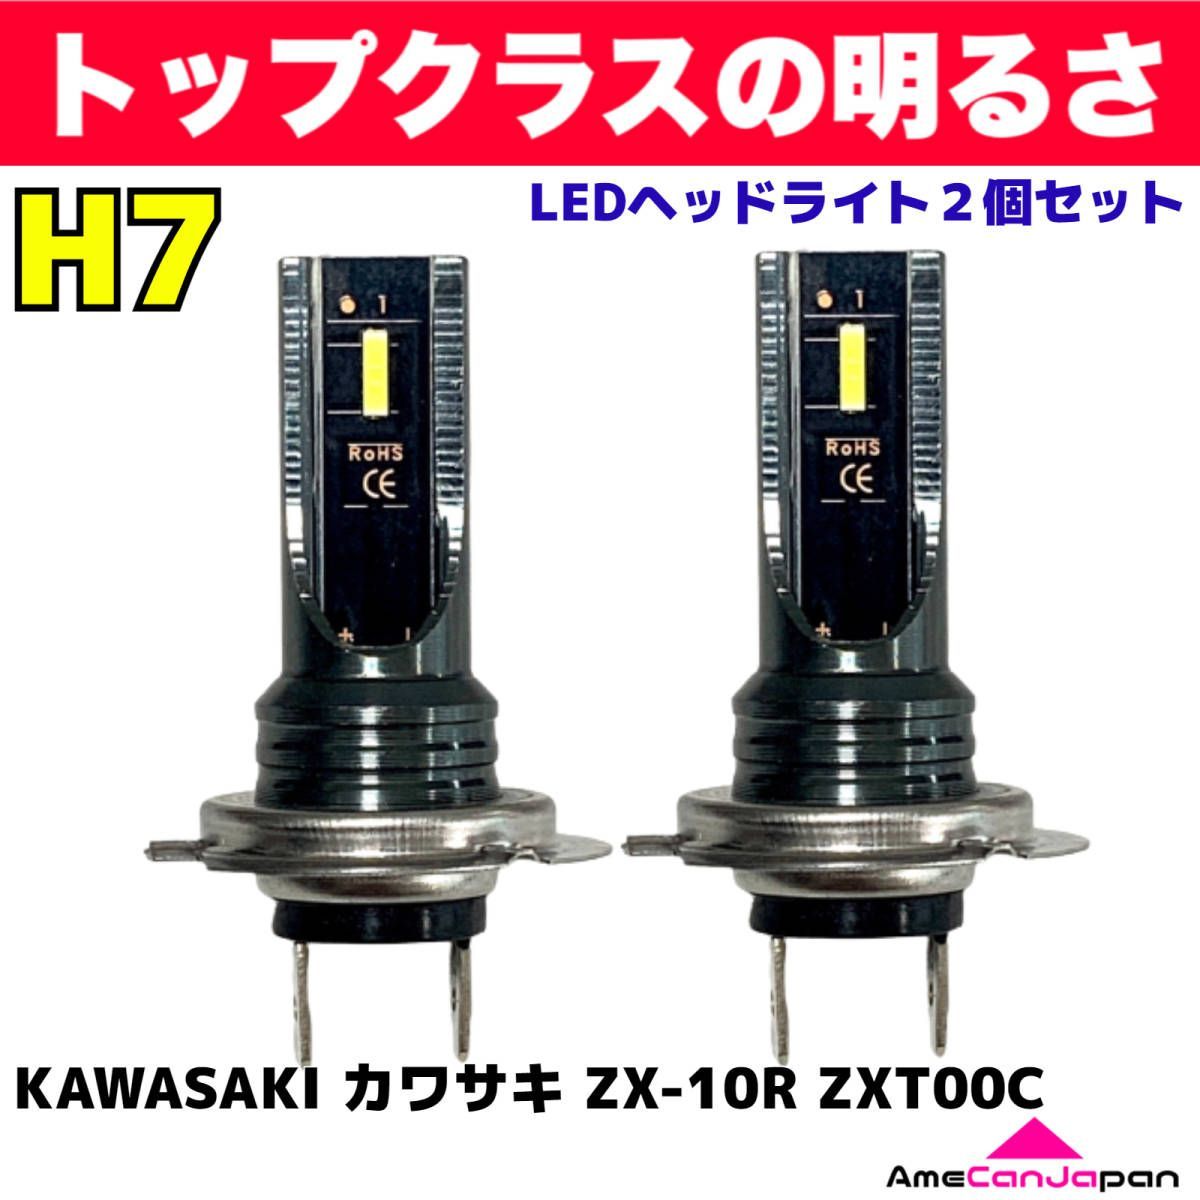 AmeCanJapan KAWASAKI カワサキ ZX-10R ZXT00C 適合 H7 LED ヘッドライト バイク用 Hi LOW ホワイト 2灯  爆光 CSPチップ搭載 パーツ バイク用品 - メルカリ